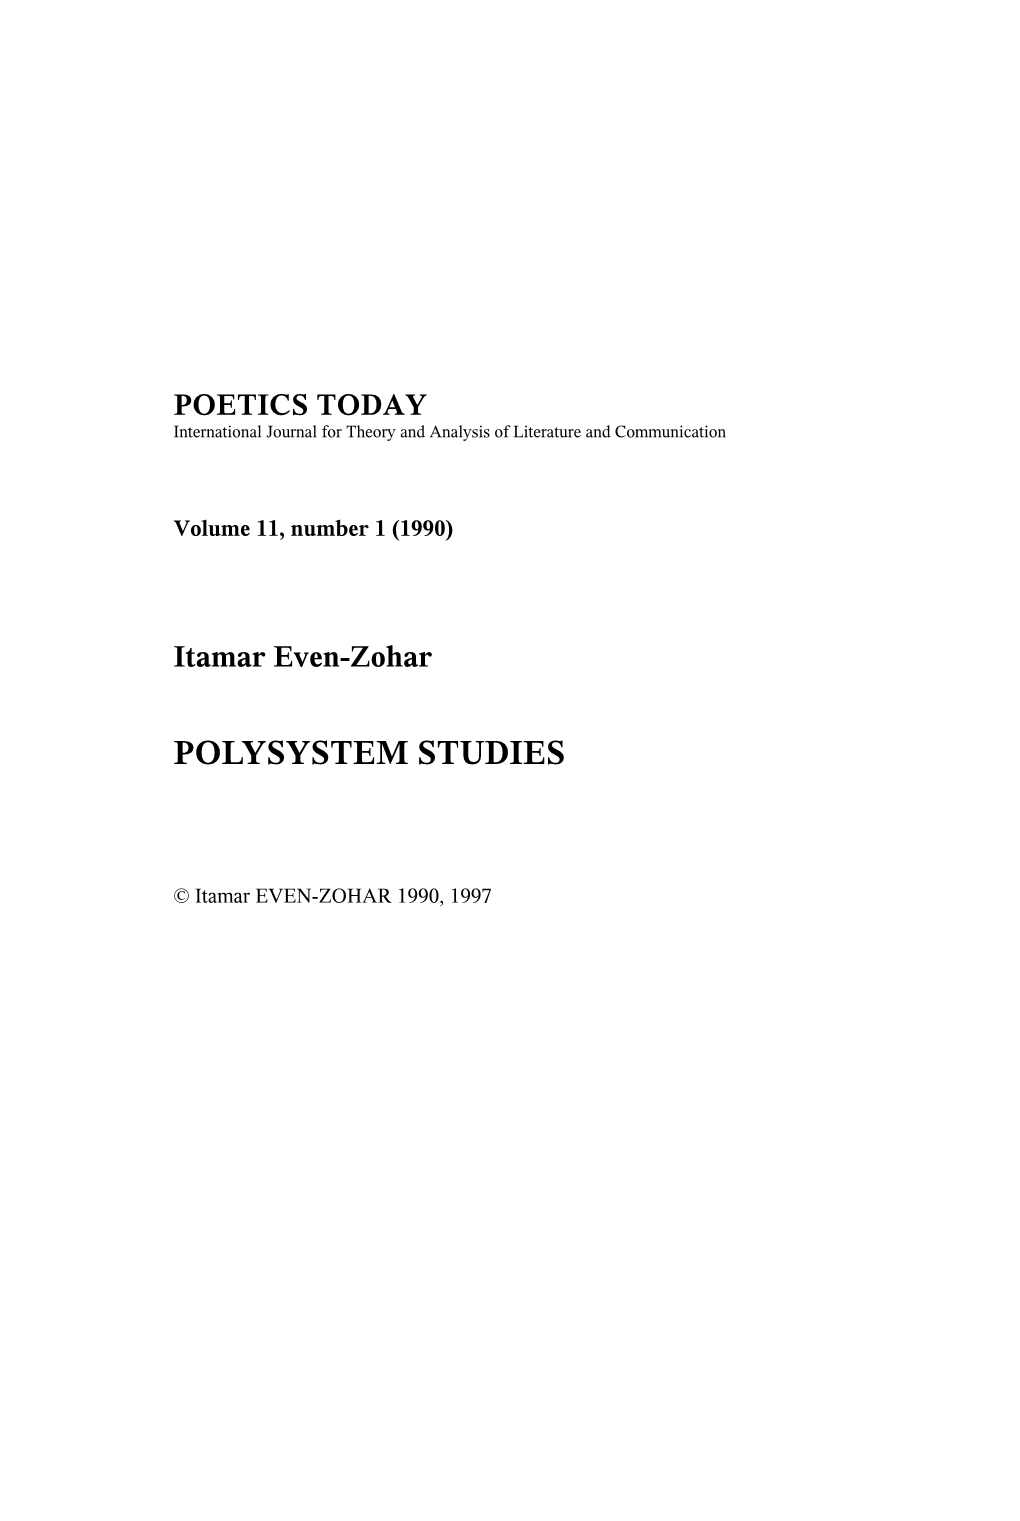 Itamar Even-Zohar: Polysystem Studies 1990